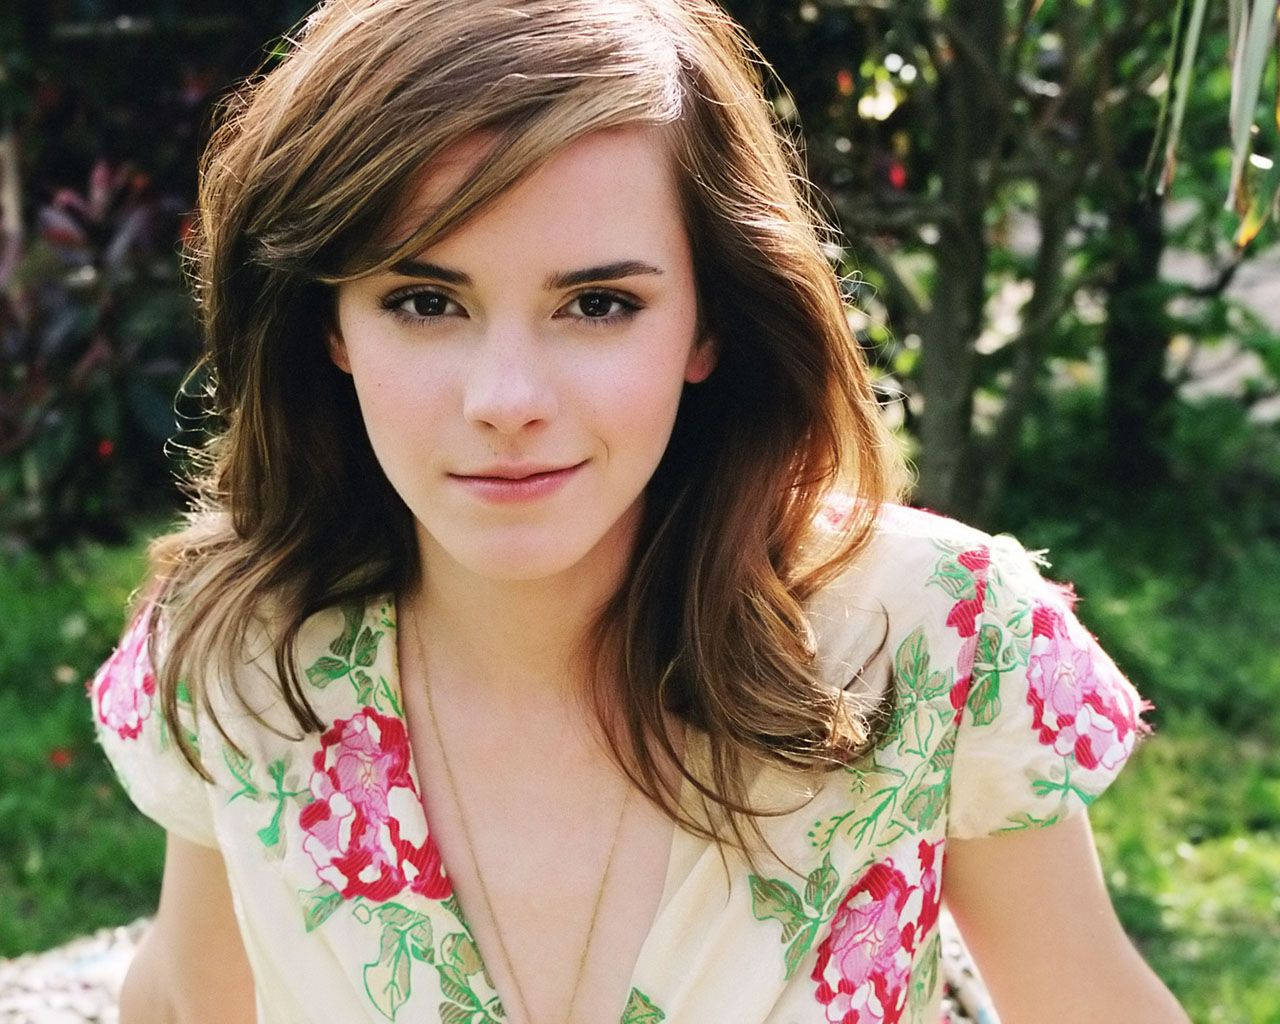 Floral Dress Emma Watson Wallpaper